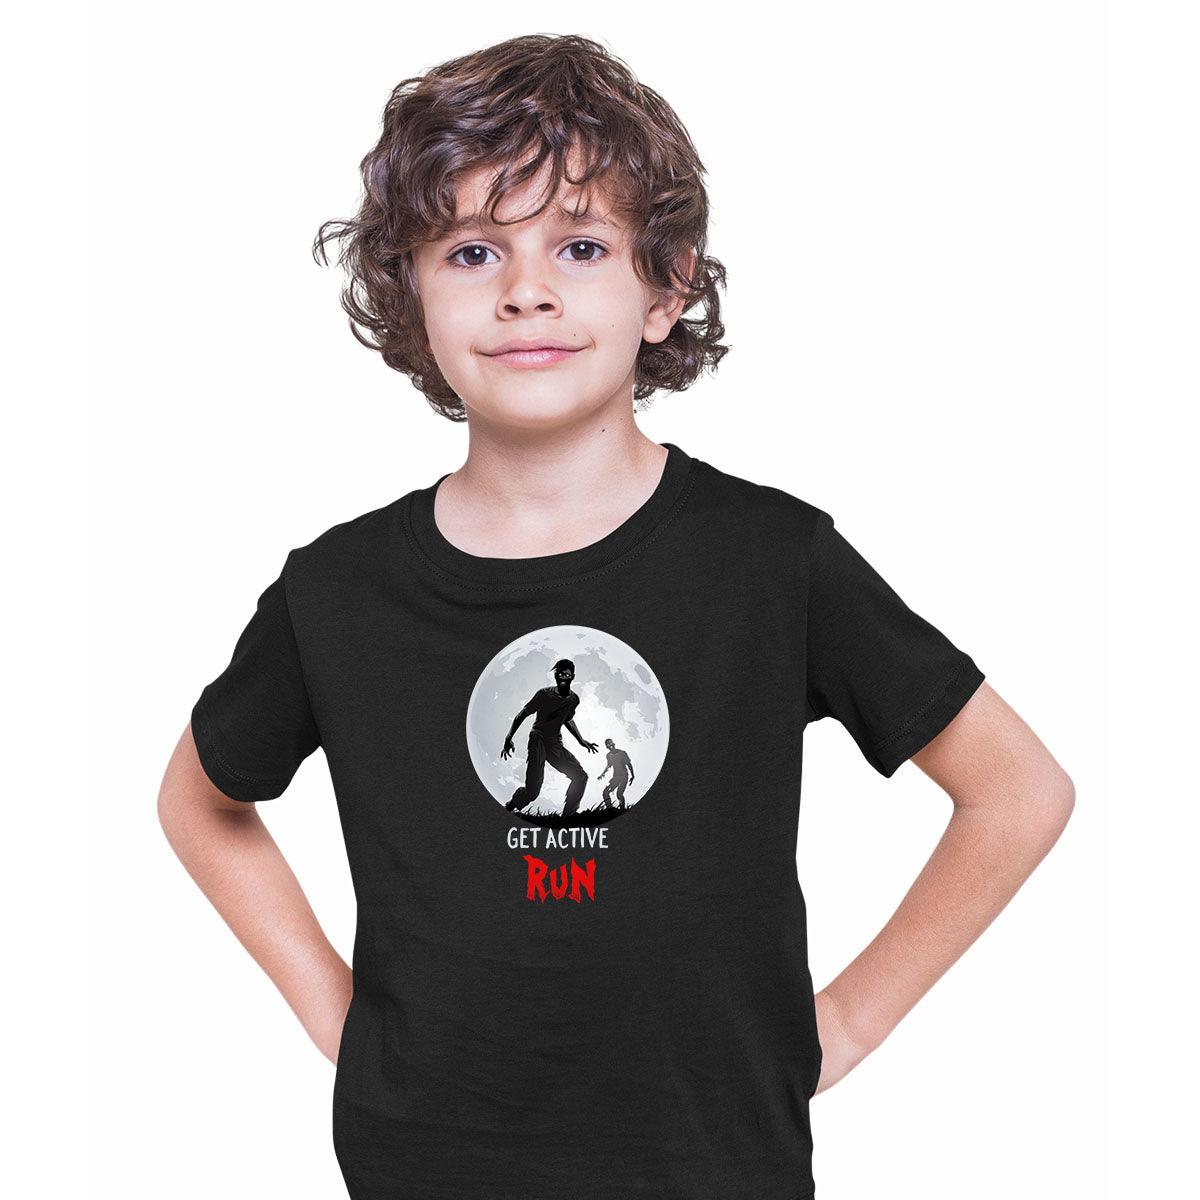 Halloween Get active Running Zombie T-shirt for Kids - Kuzi Tees